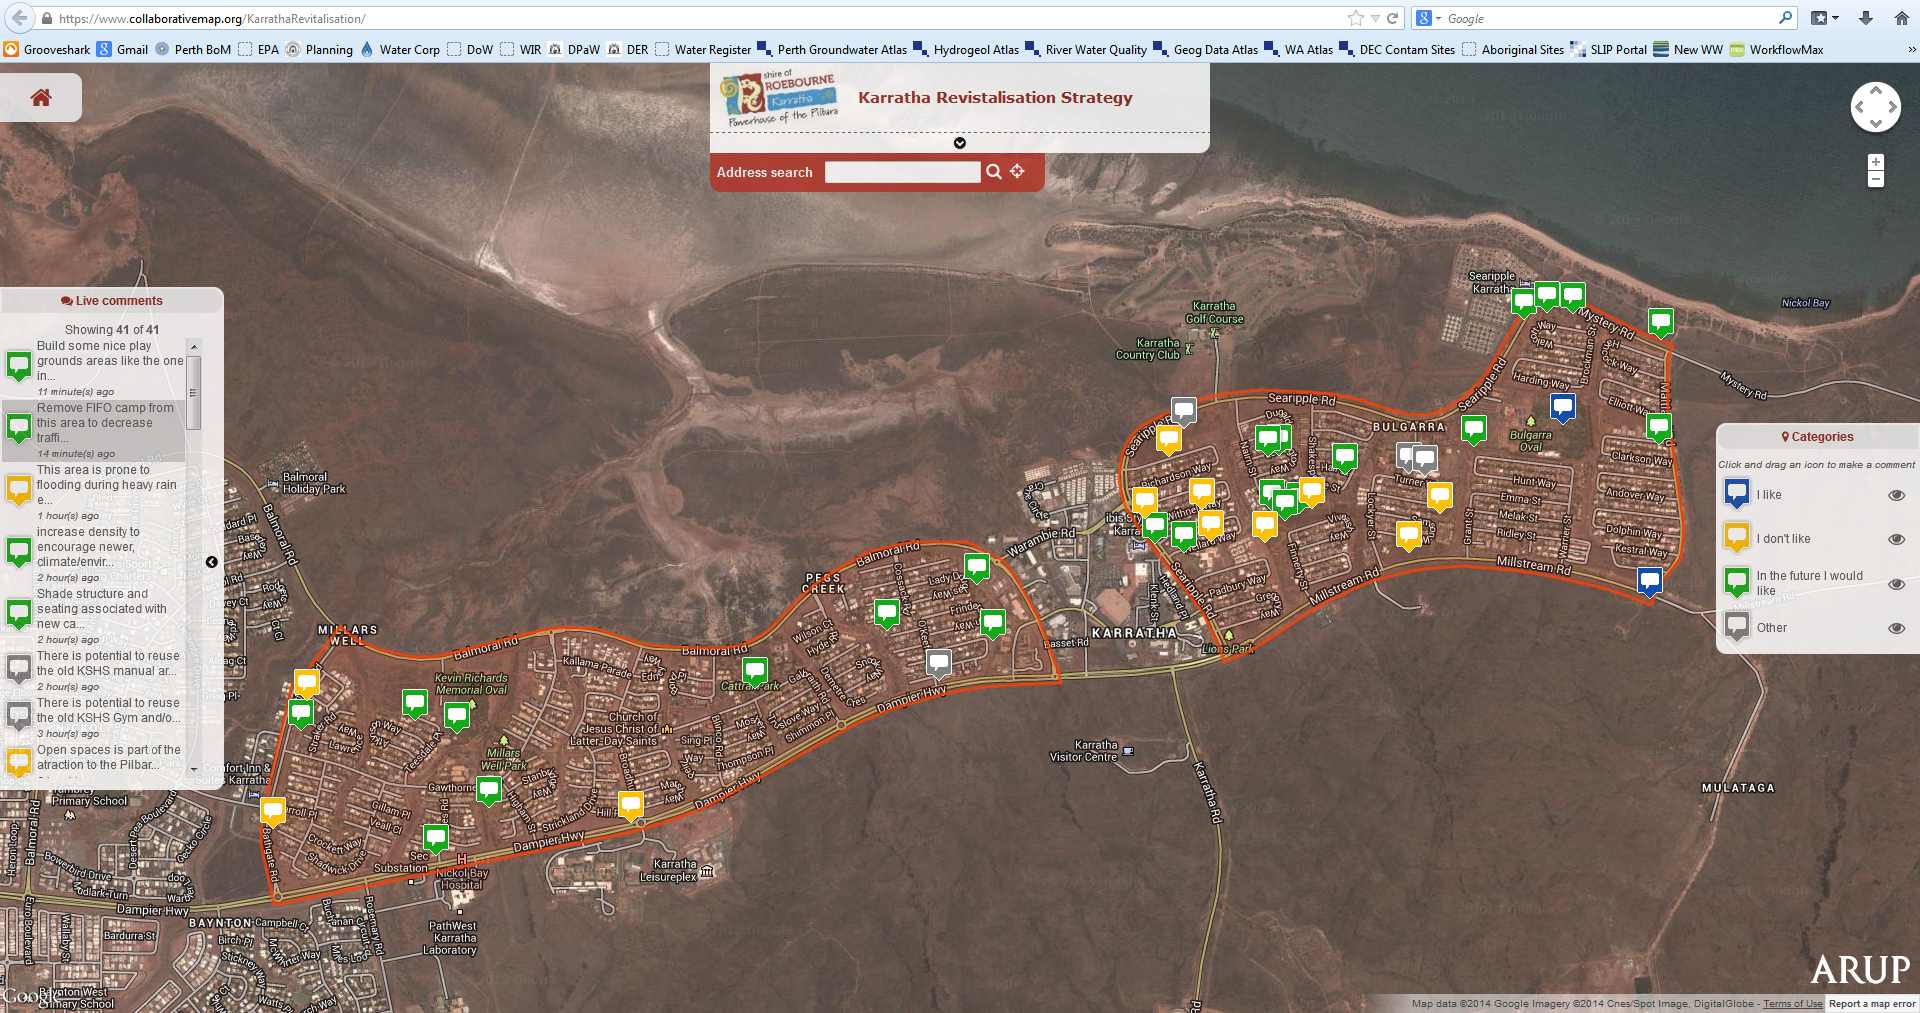 Snapshot of the Karratha Revitalisation online collaborative map